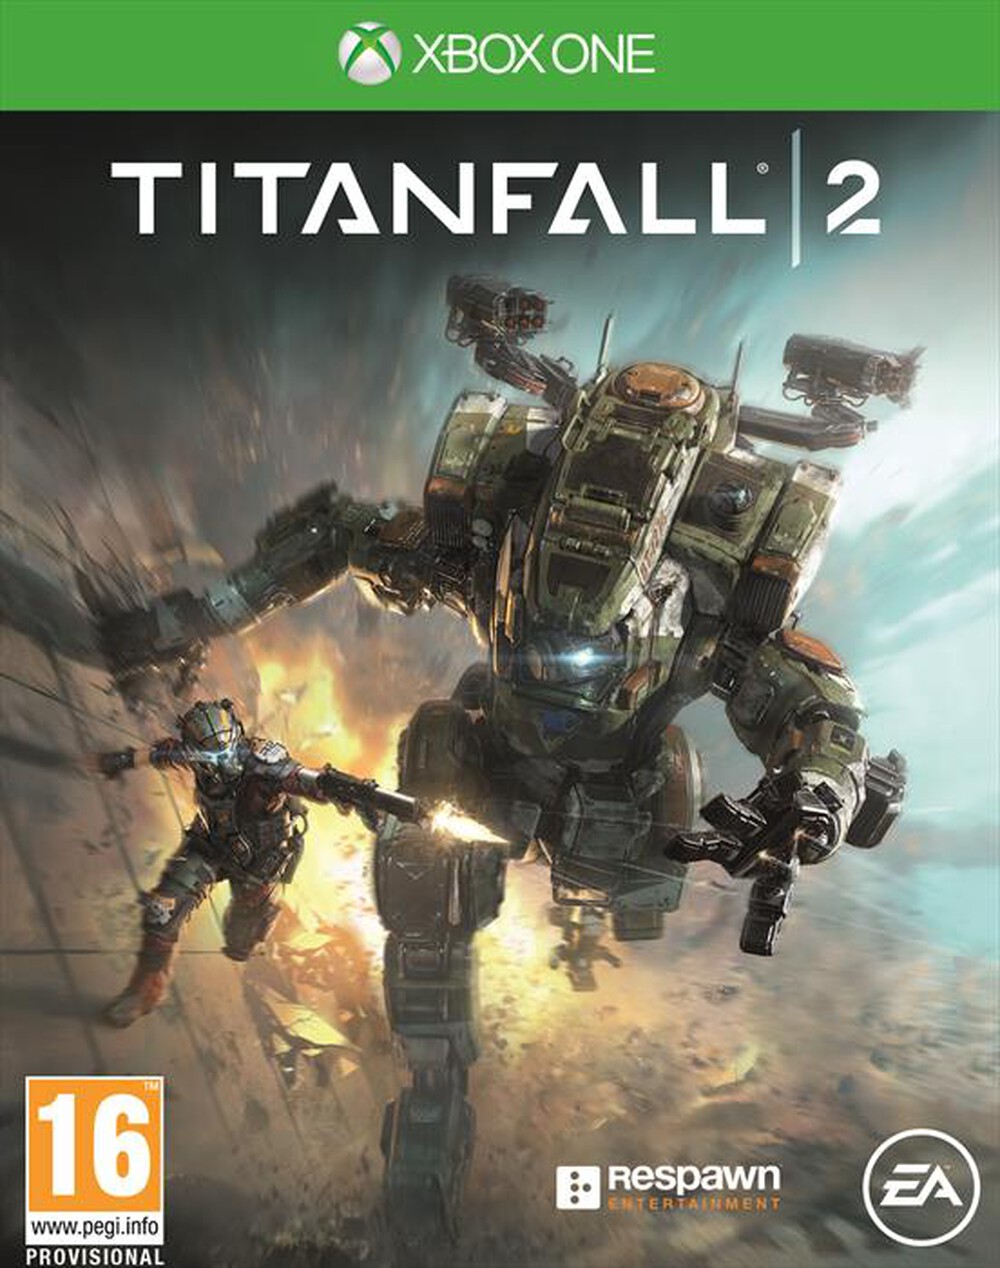 "ELECTRONIC ARTS - Titanfall 2 Xbox One"